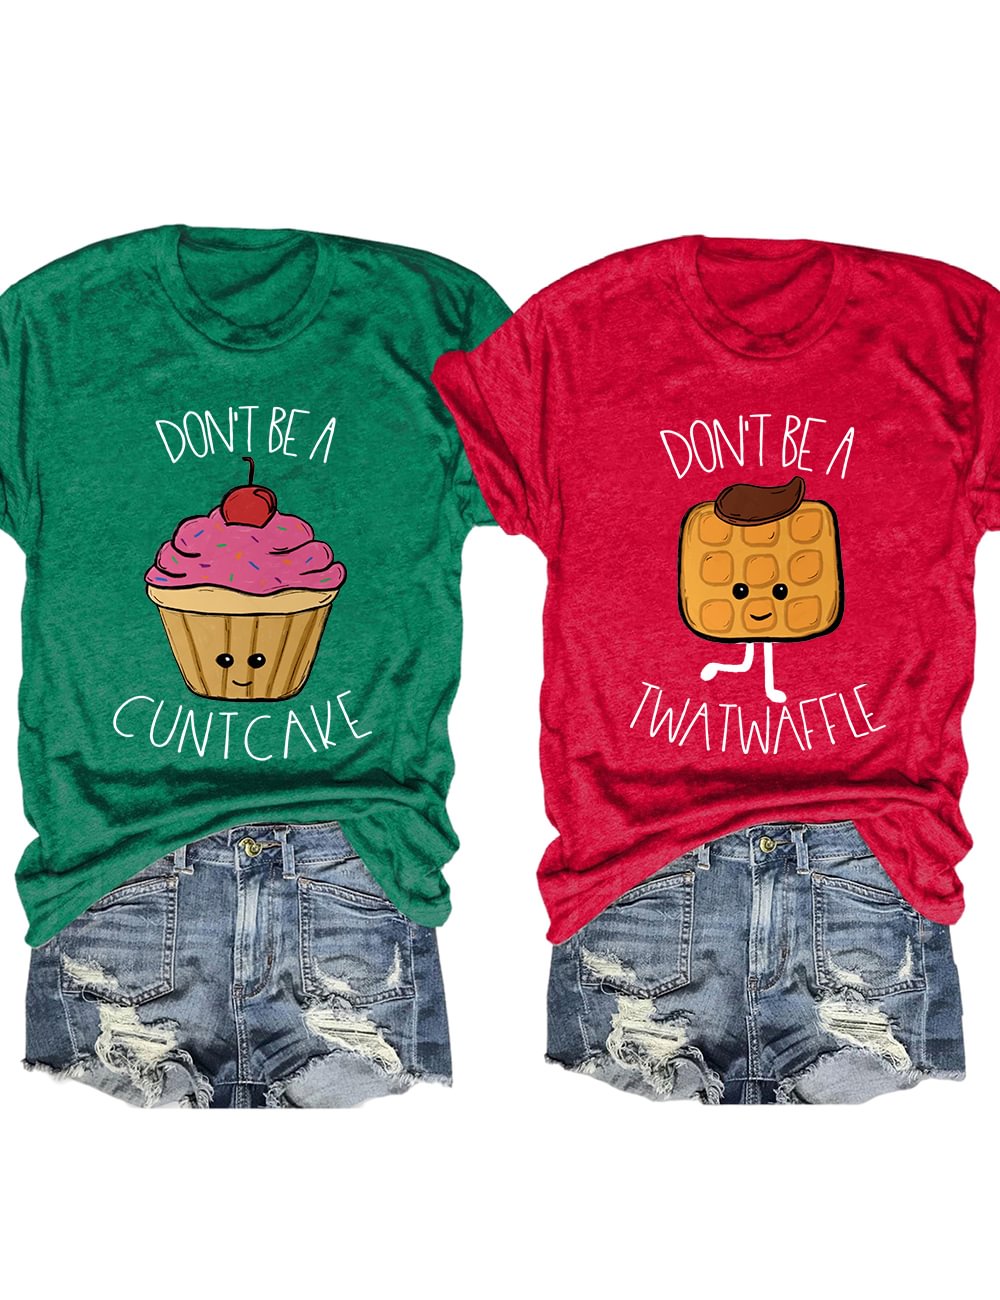 Don't Be A Cuntcake/Twatwaffle Matching T-Shirt